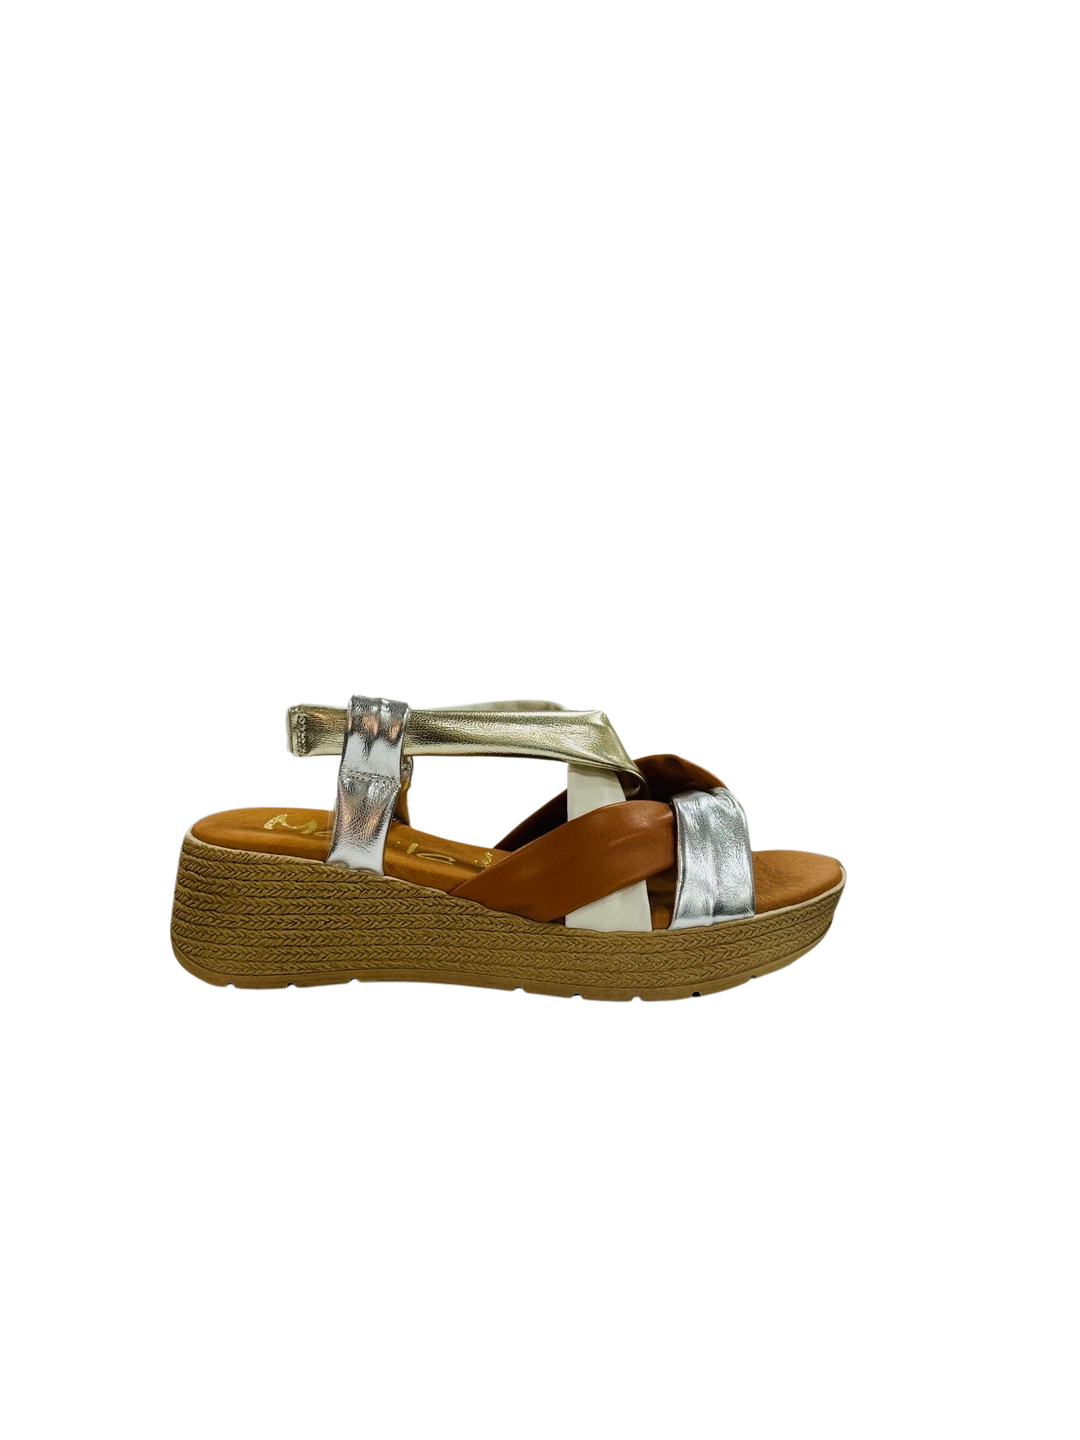 Marila Yarata Tan/Metallic Wedge Sandal